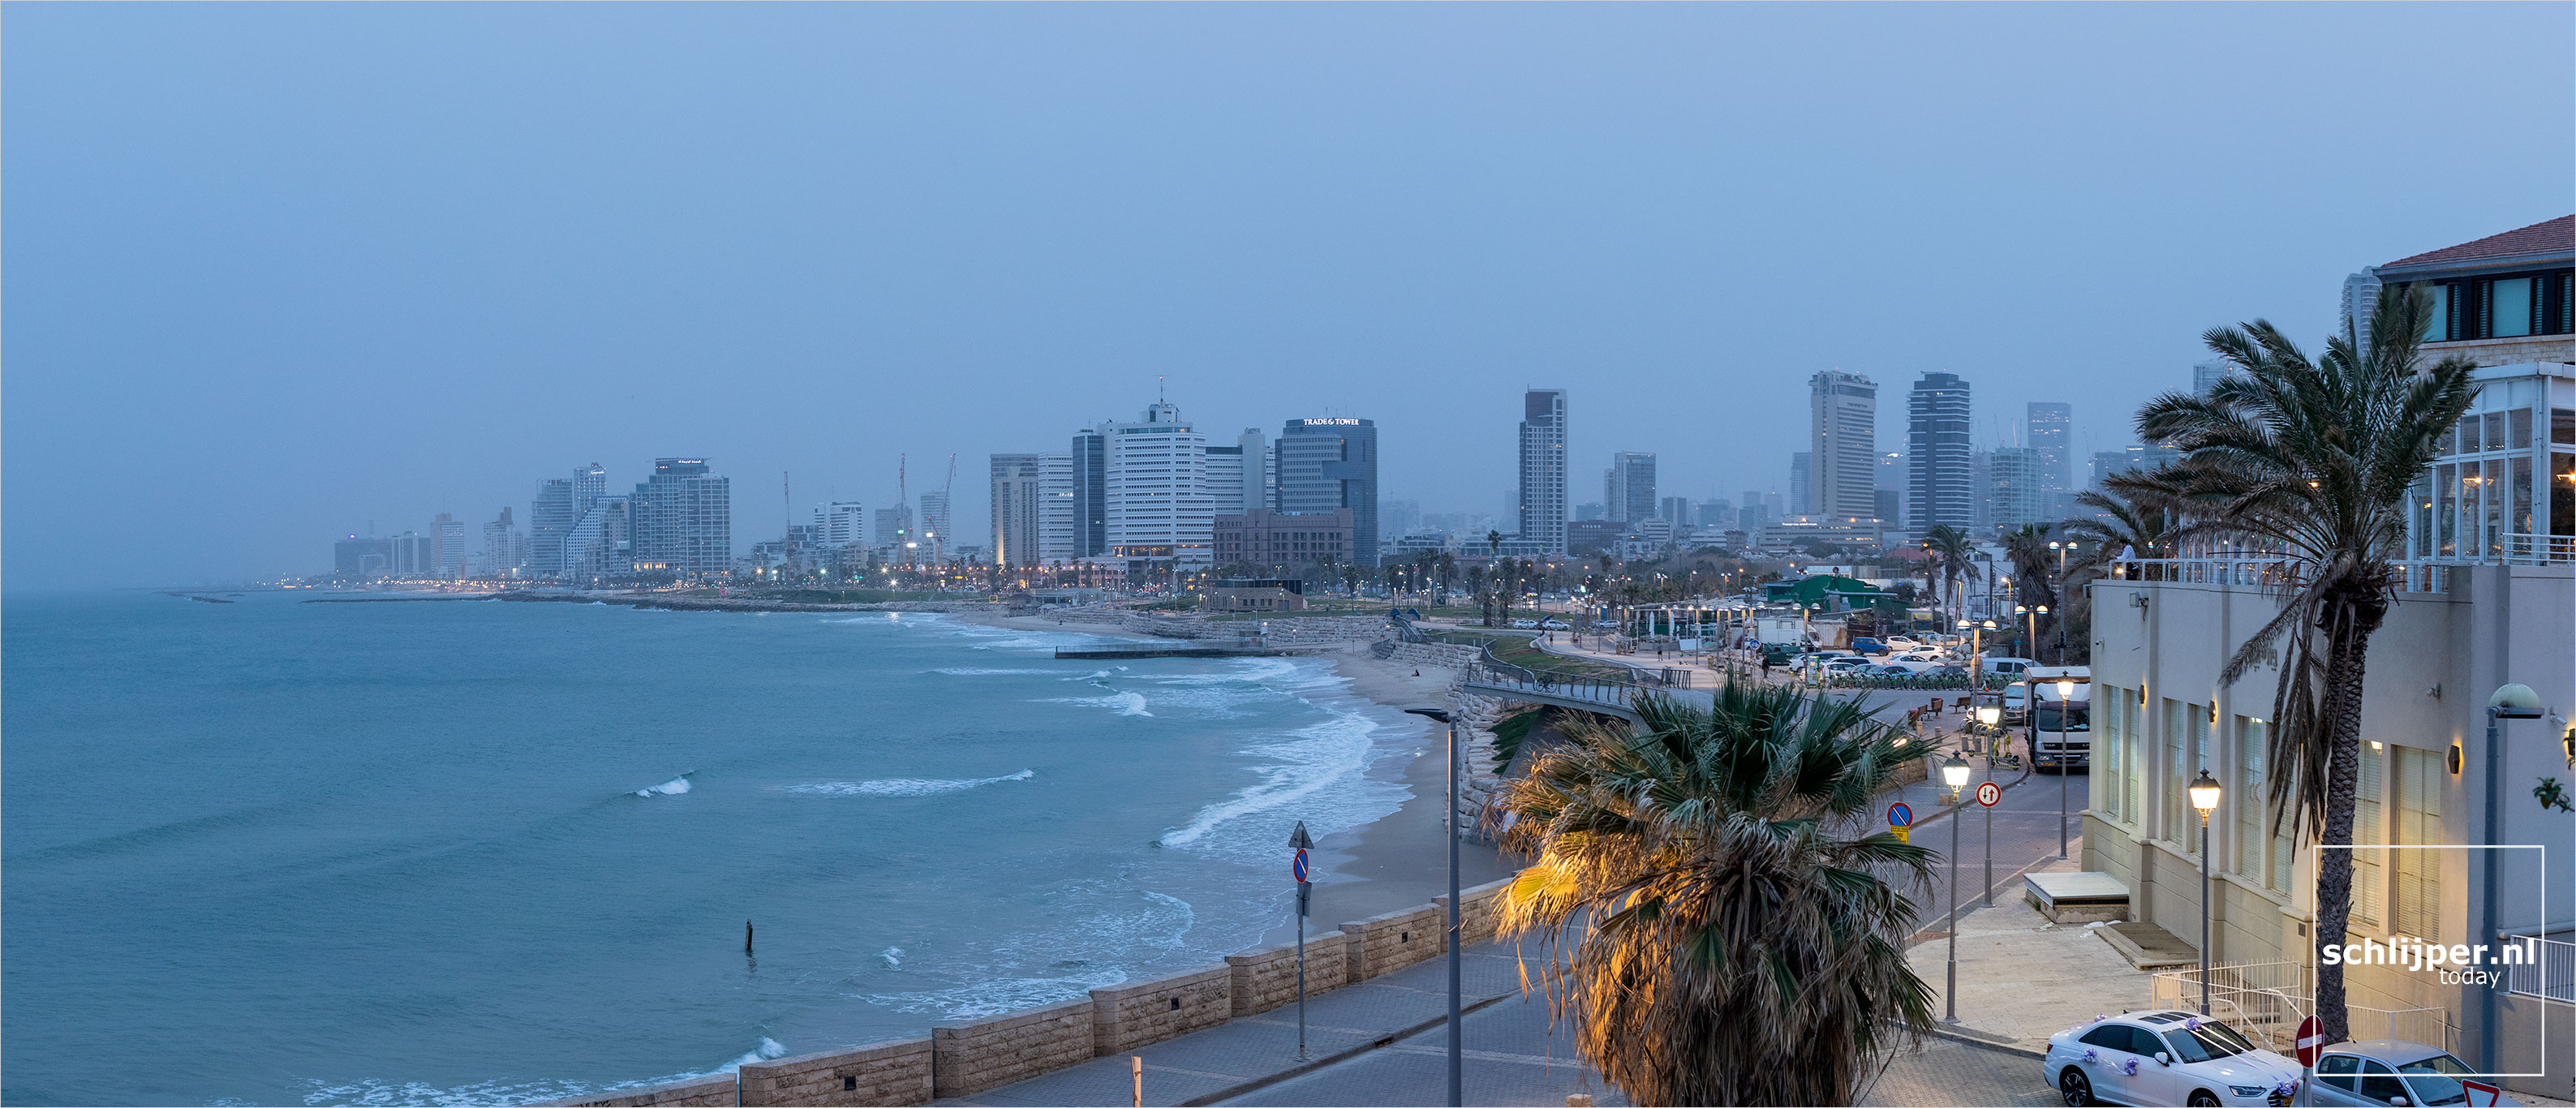 Israel, Tel Aviv, 8 april 2022